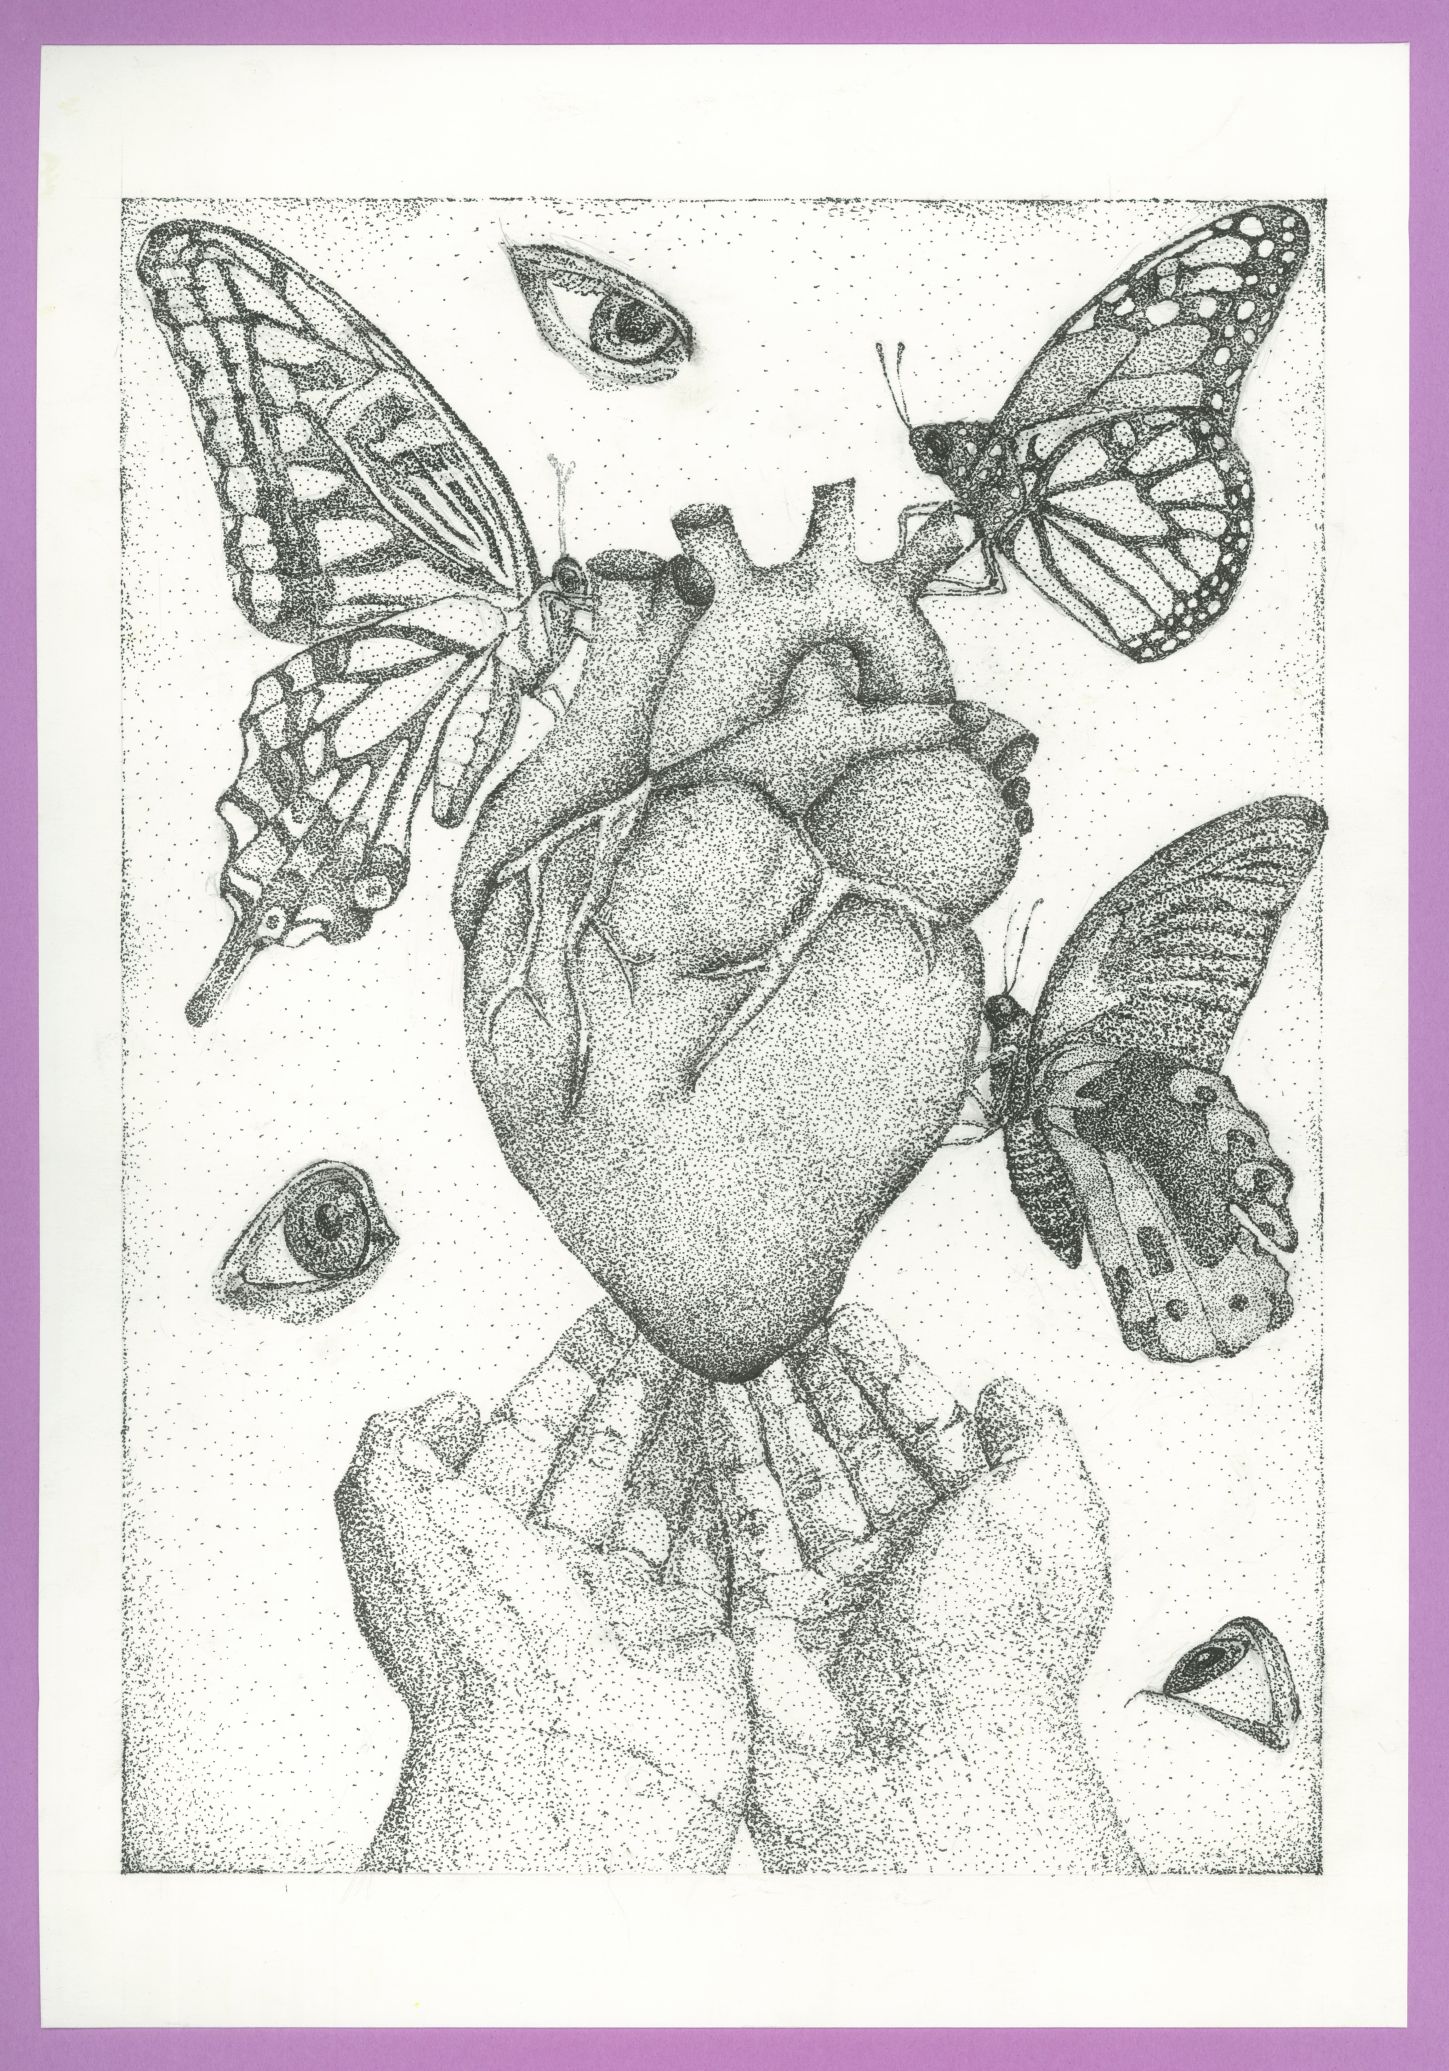 Student artwork – Heart of the heart